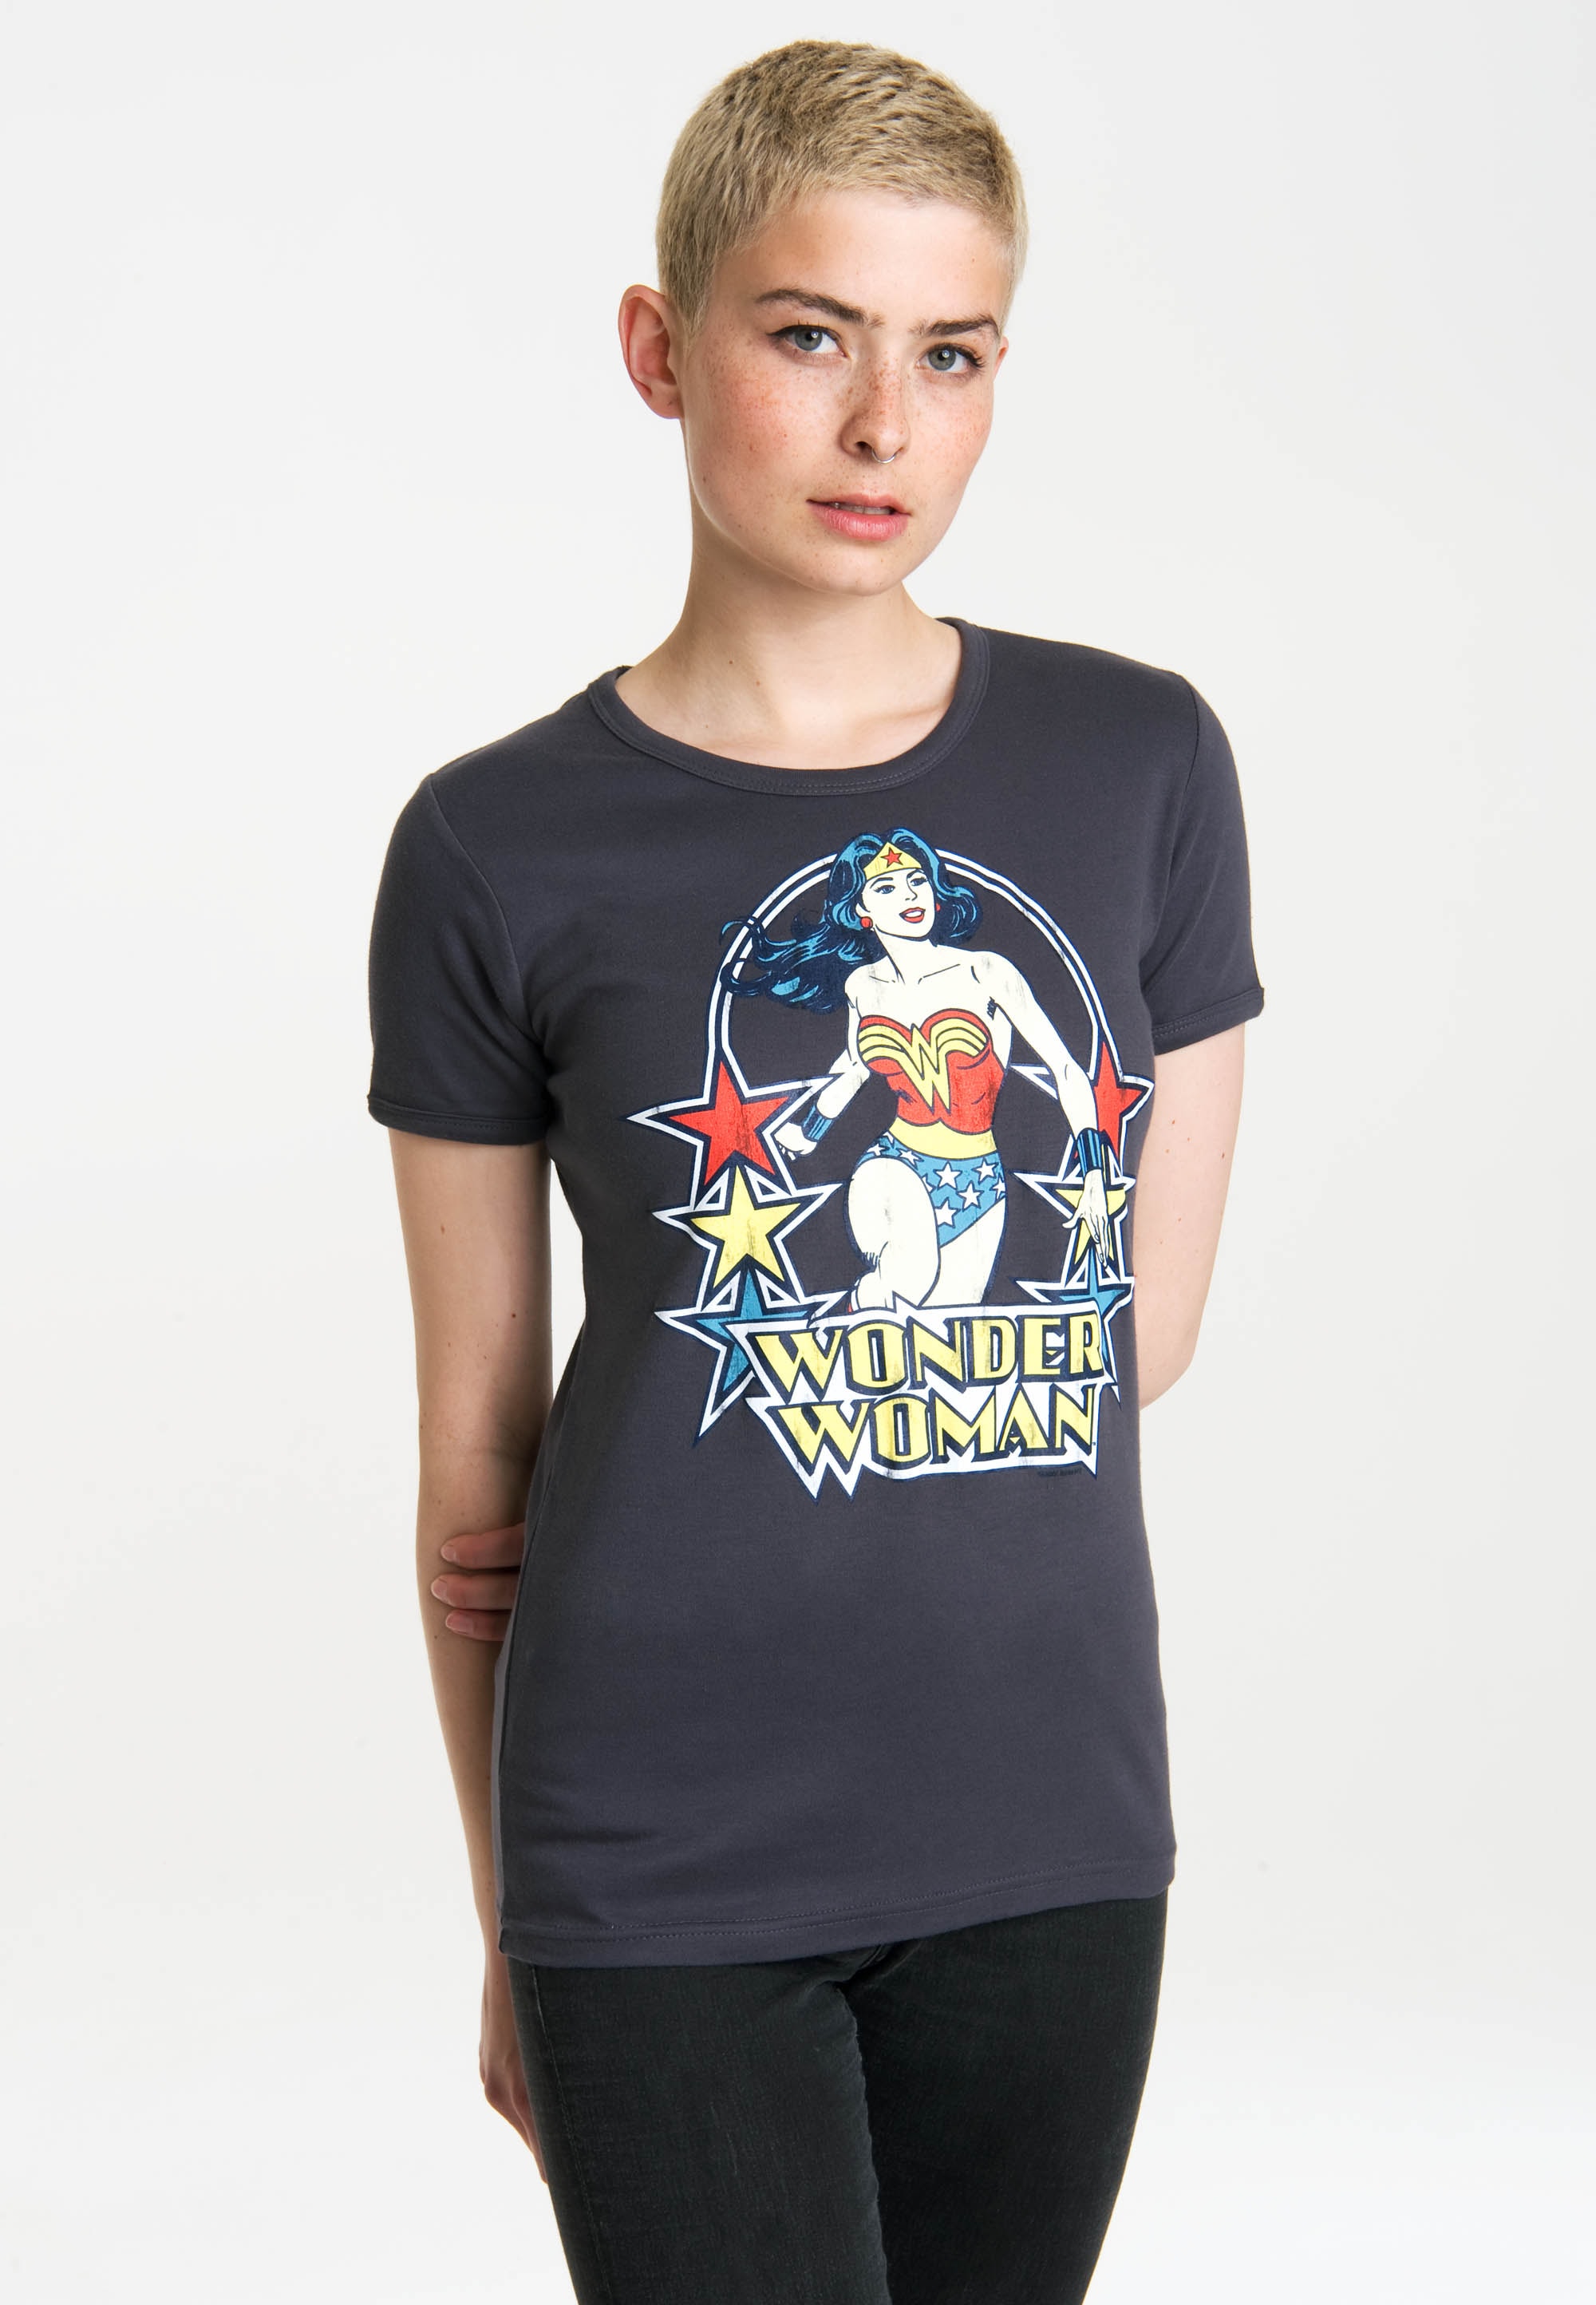 Woman LOGOSHIRT bestellen »Wonder Originaldesign mit lizenziertem Stars«, T-Shirt –